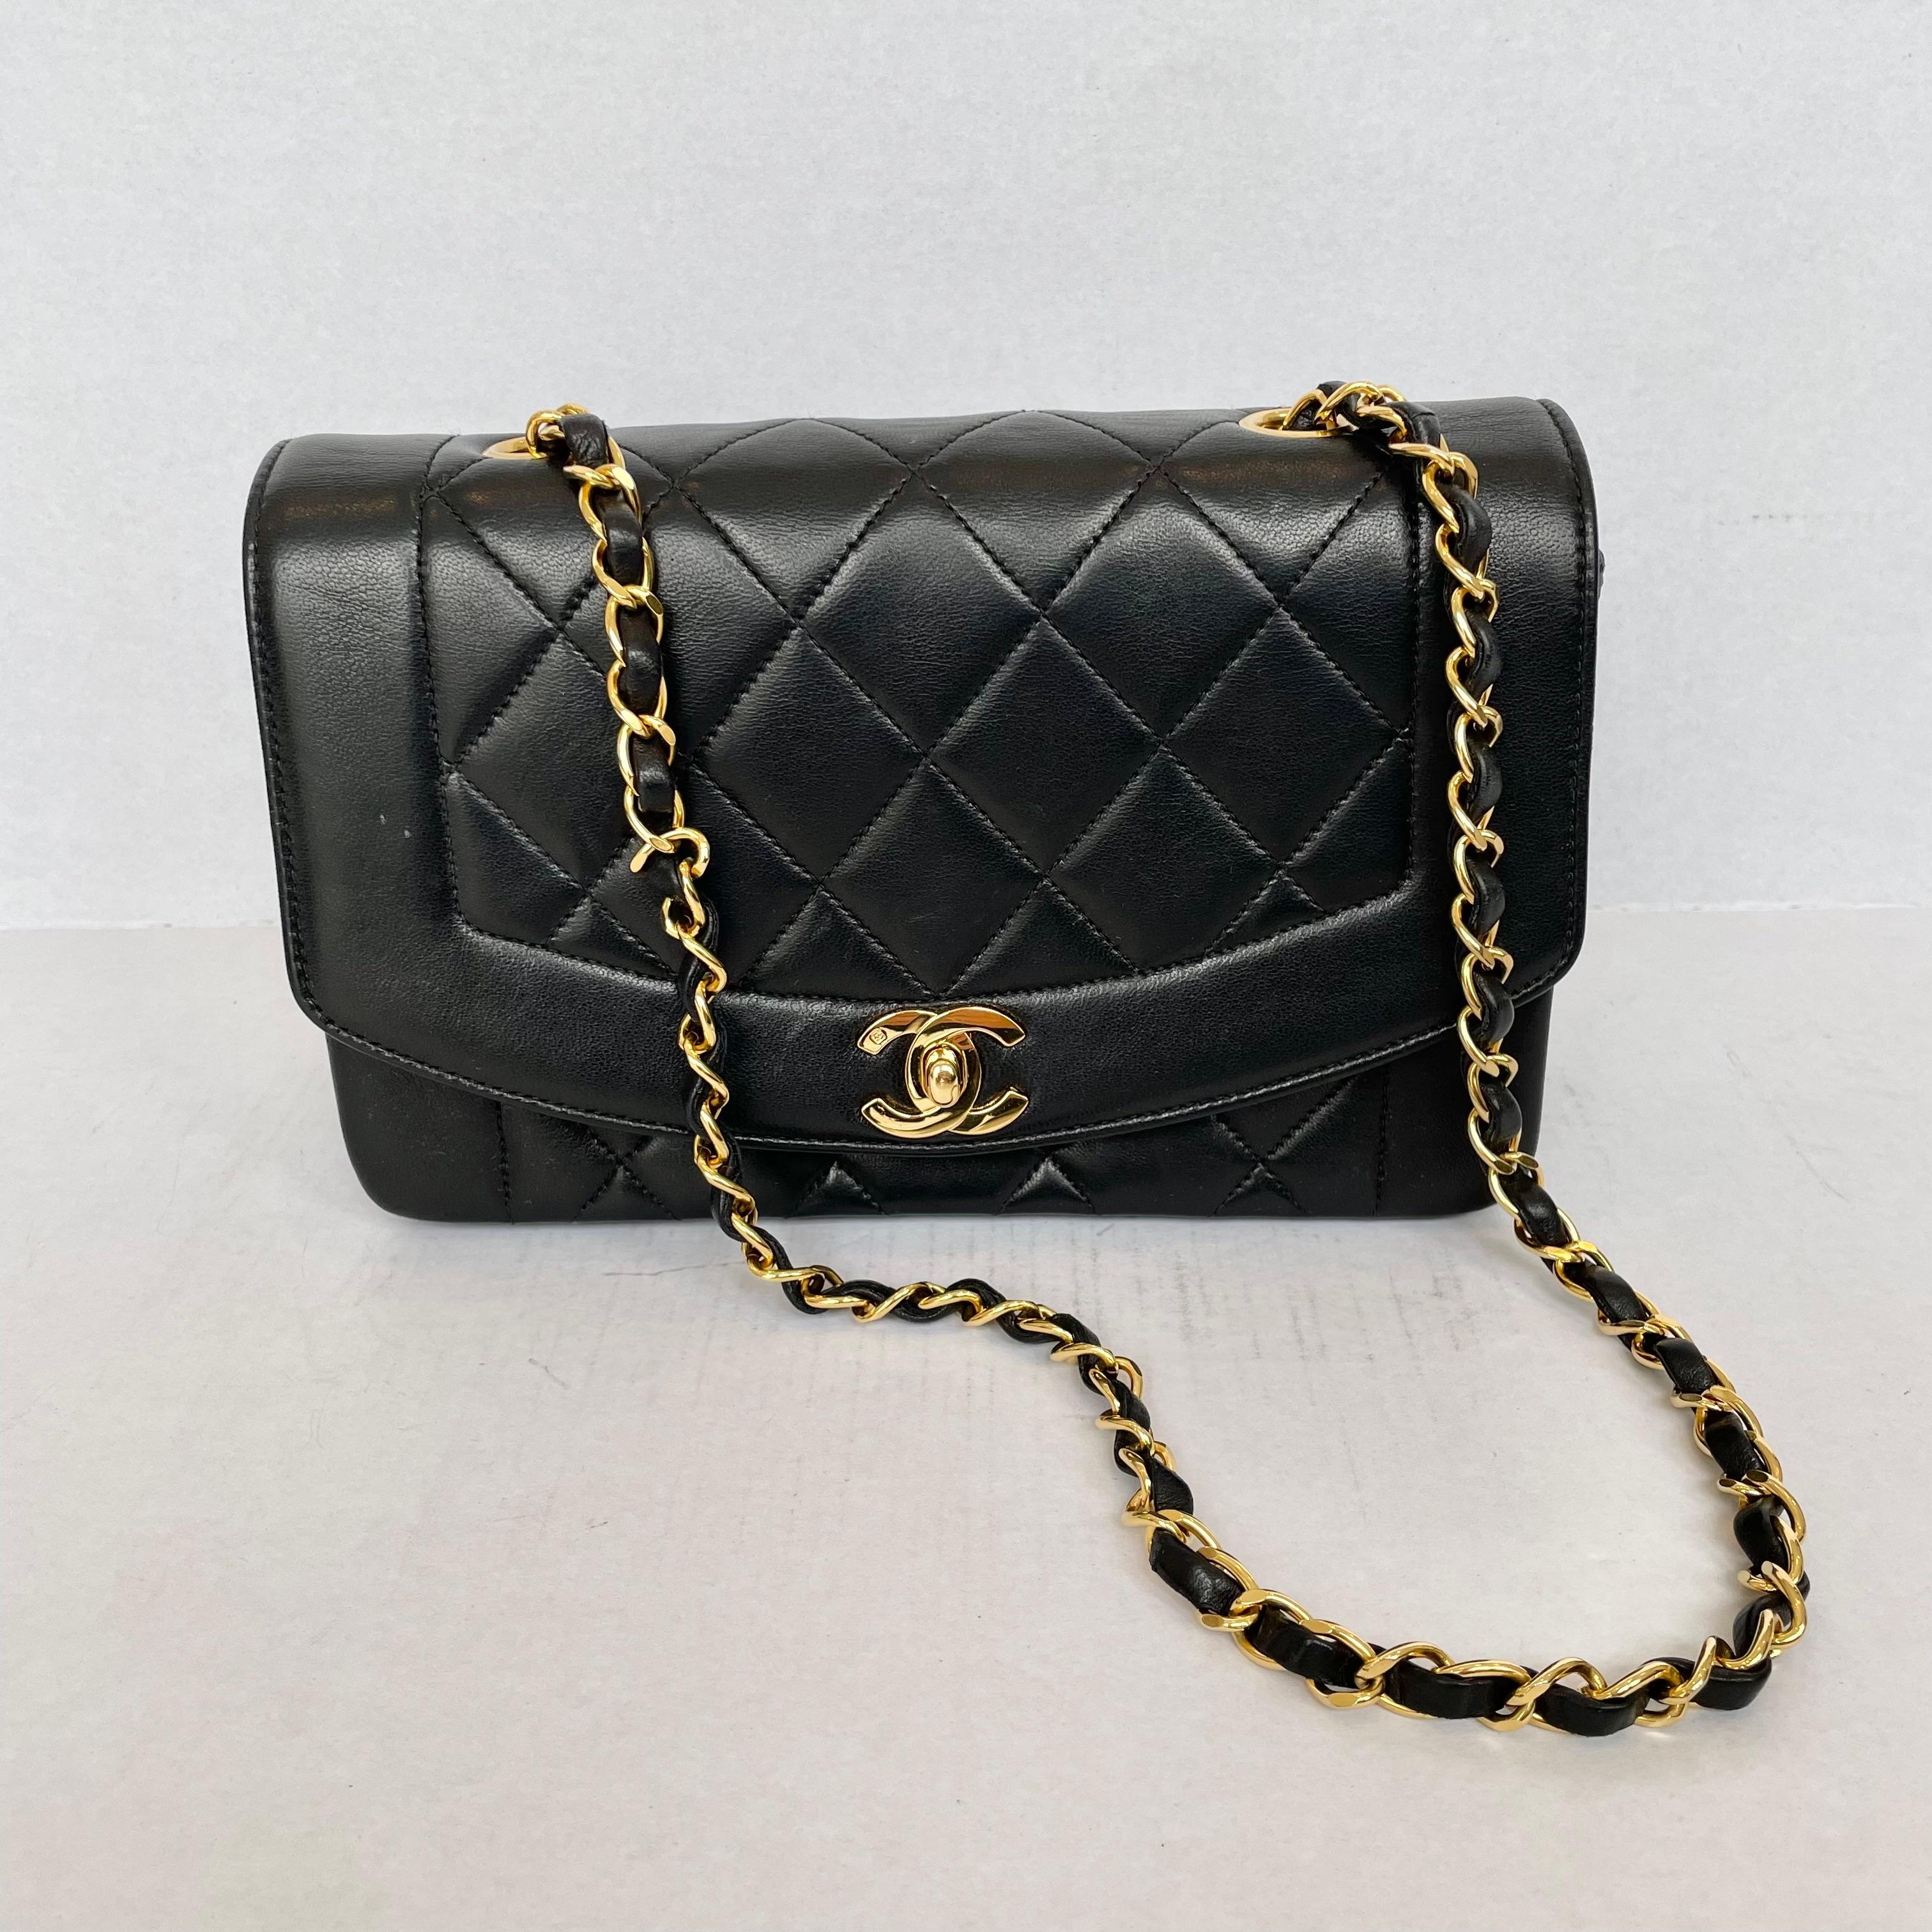 Rare Chanel Diana Shoulder Bag Black Quilted Lambskin Leather, 1990s France For Sale 5